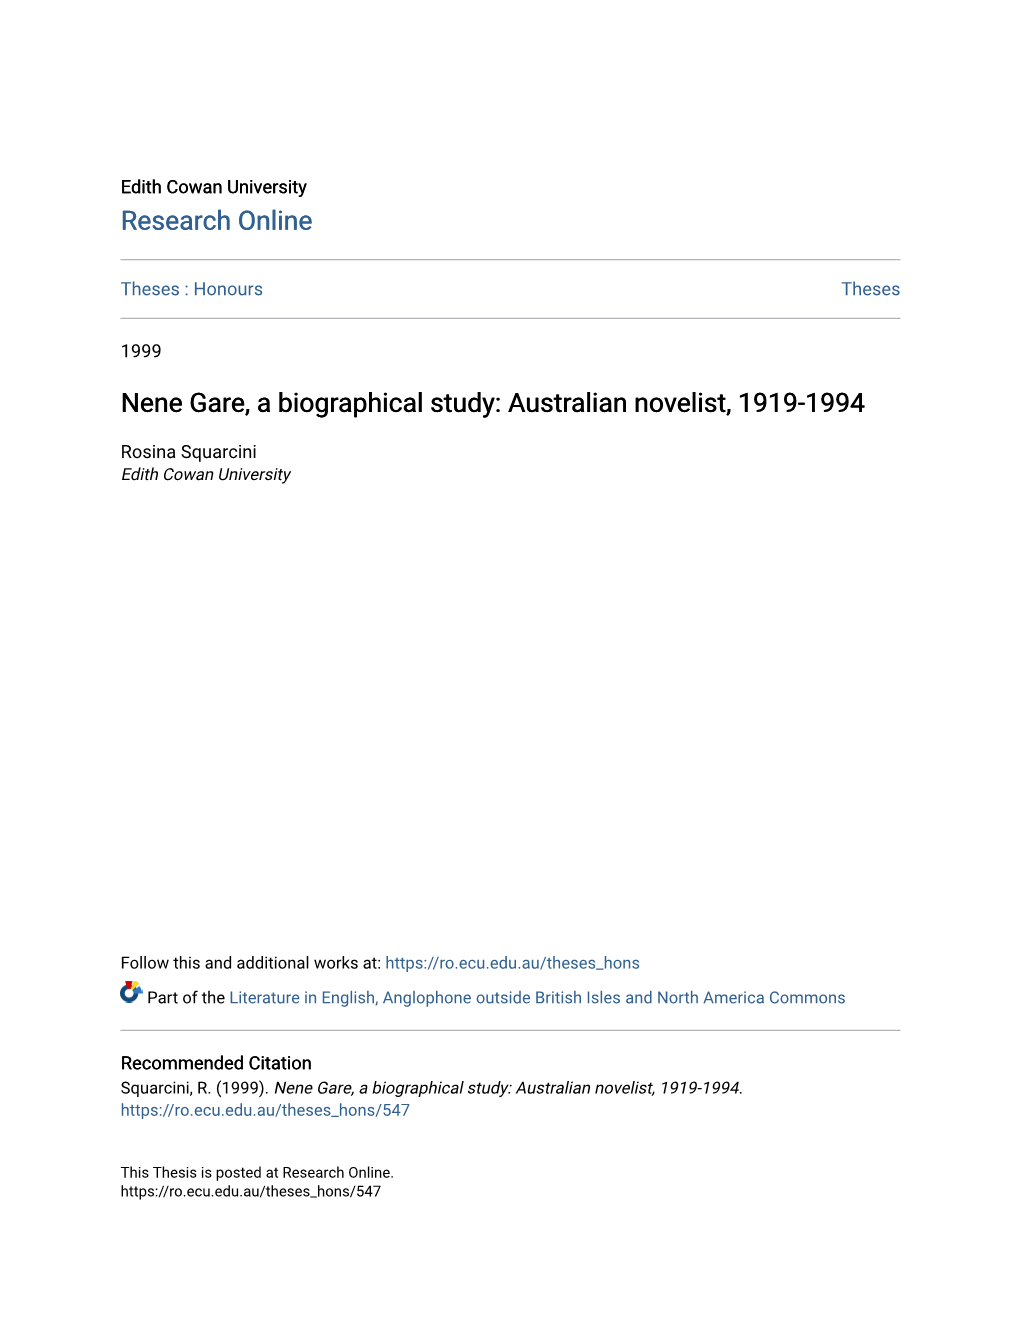 Nene Gare, a Biographical Study: Australian Novelist, 1919-1994